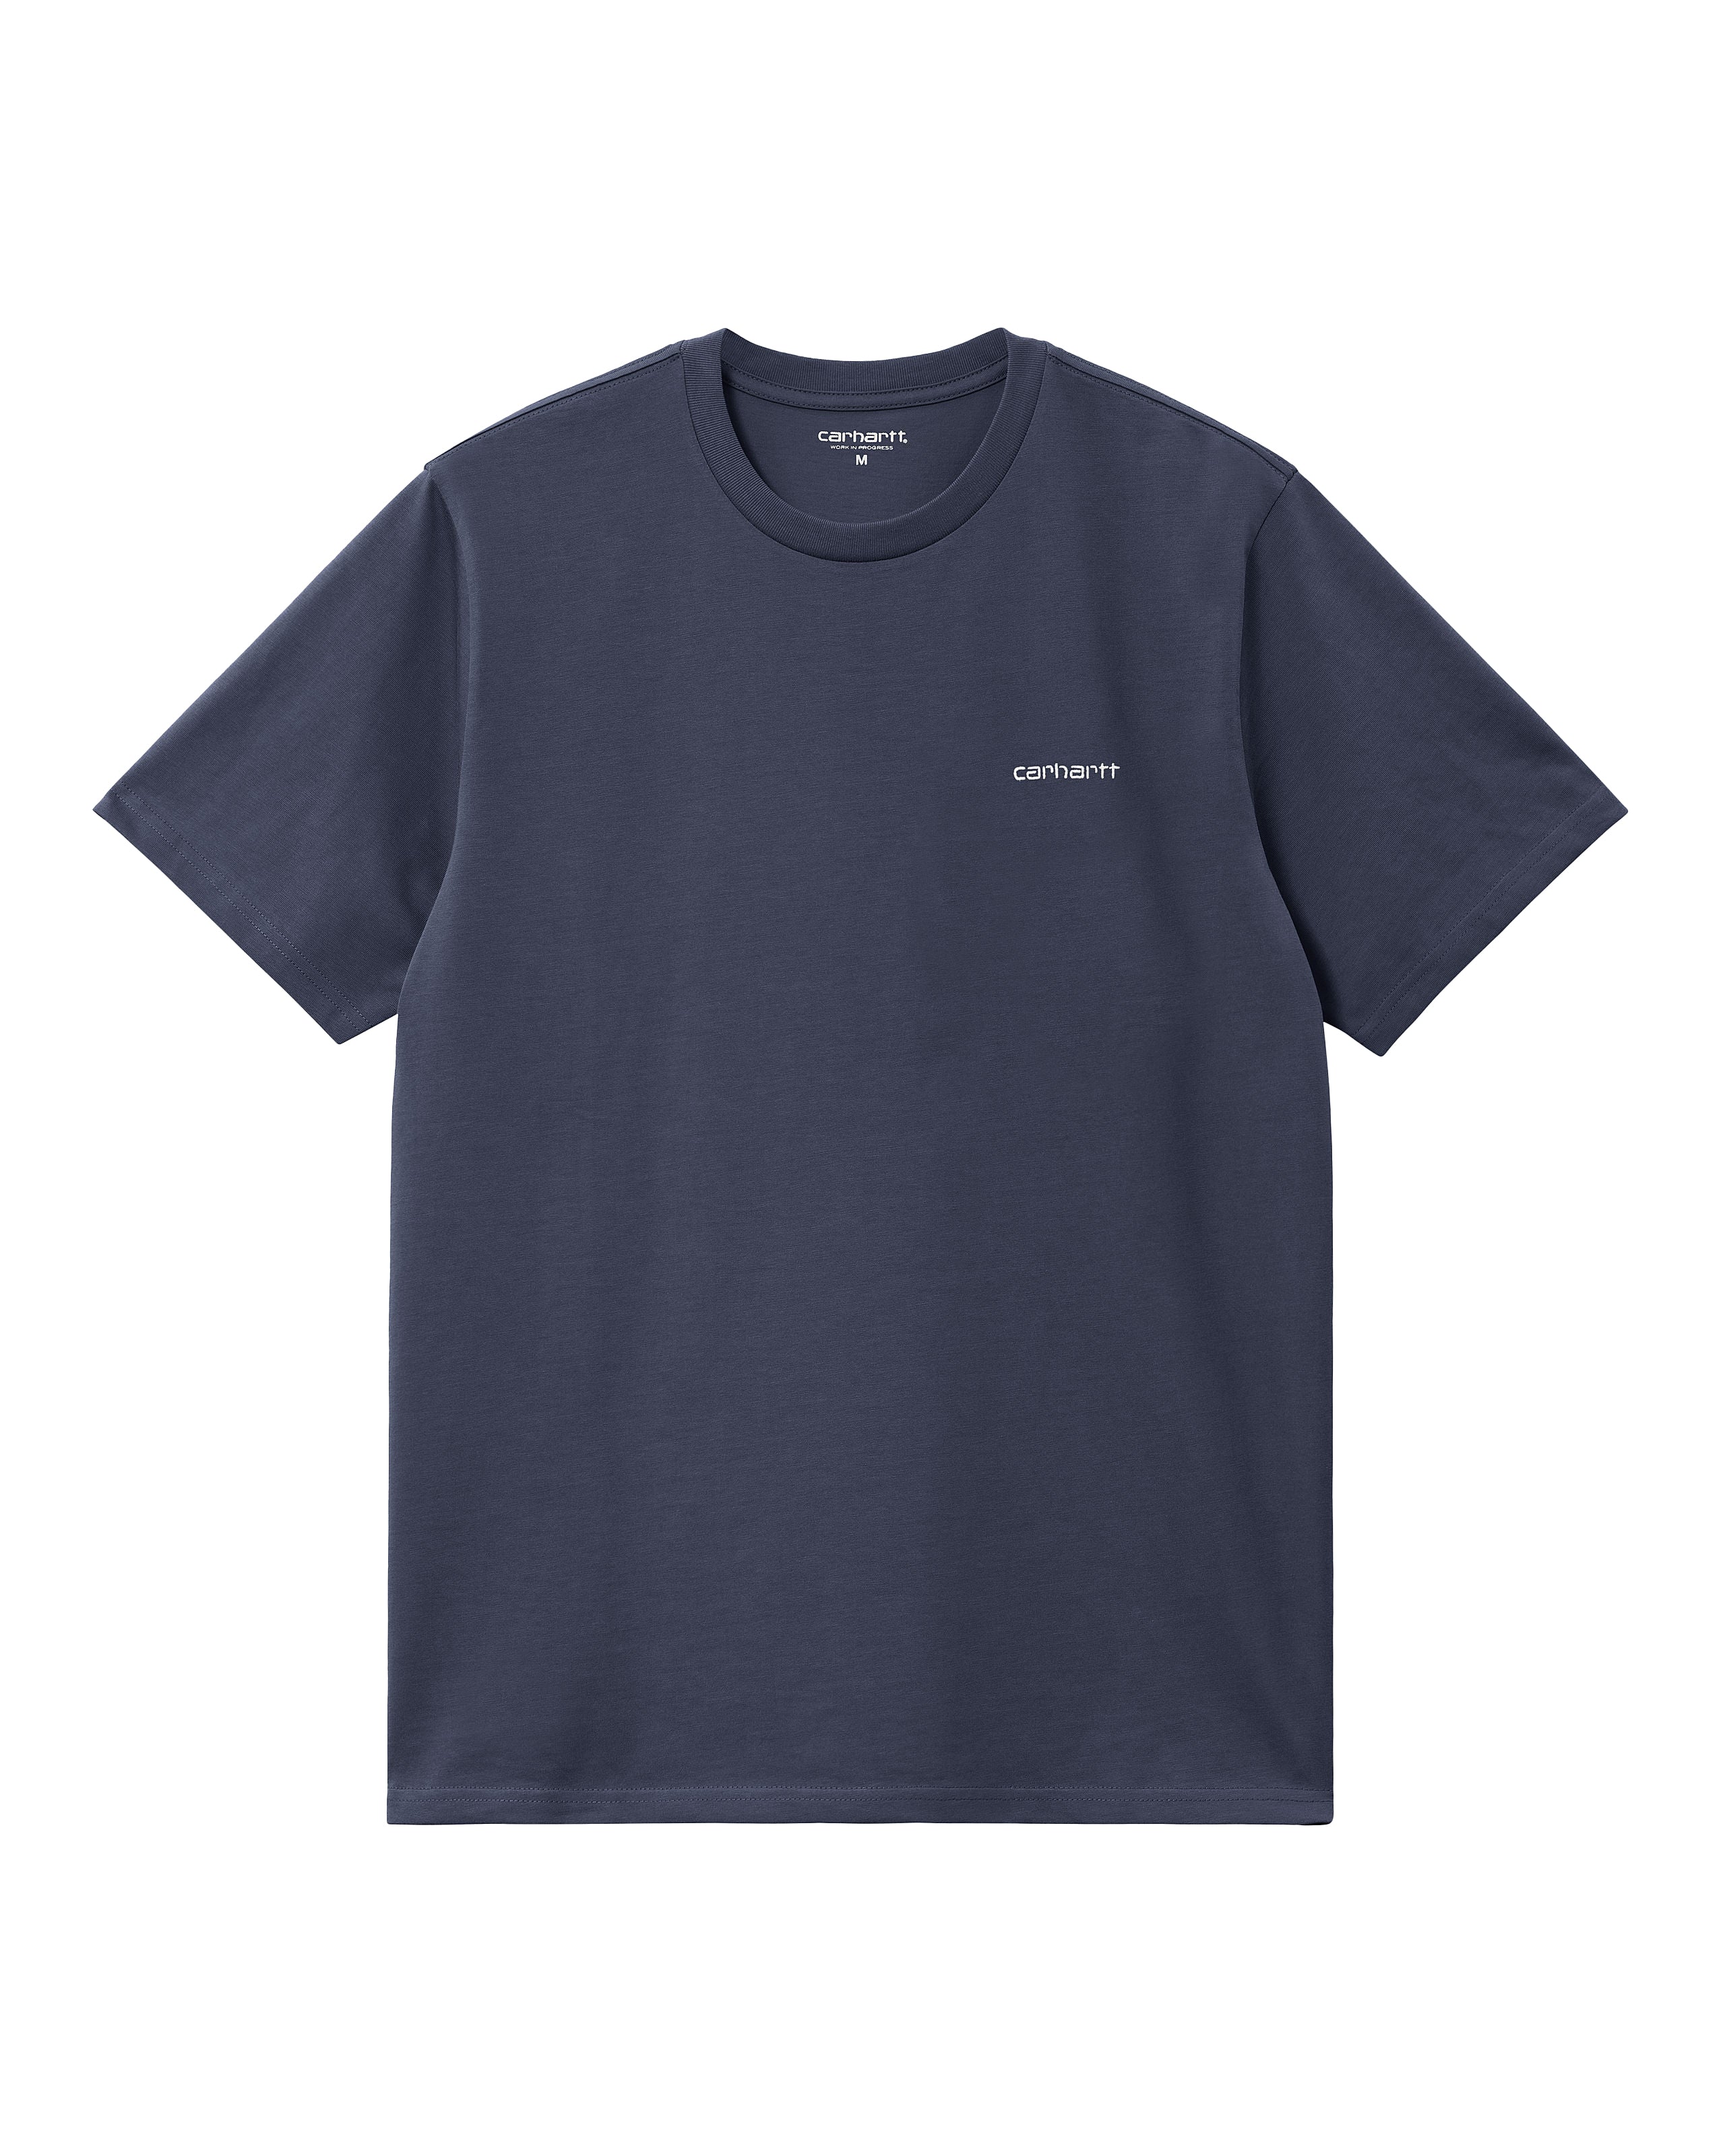 Samarreta S/S Script Embroidery T-Shirt - Air force blue / White